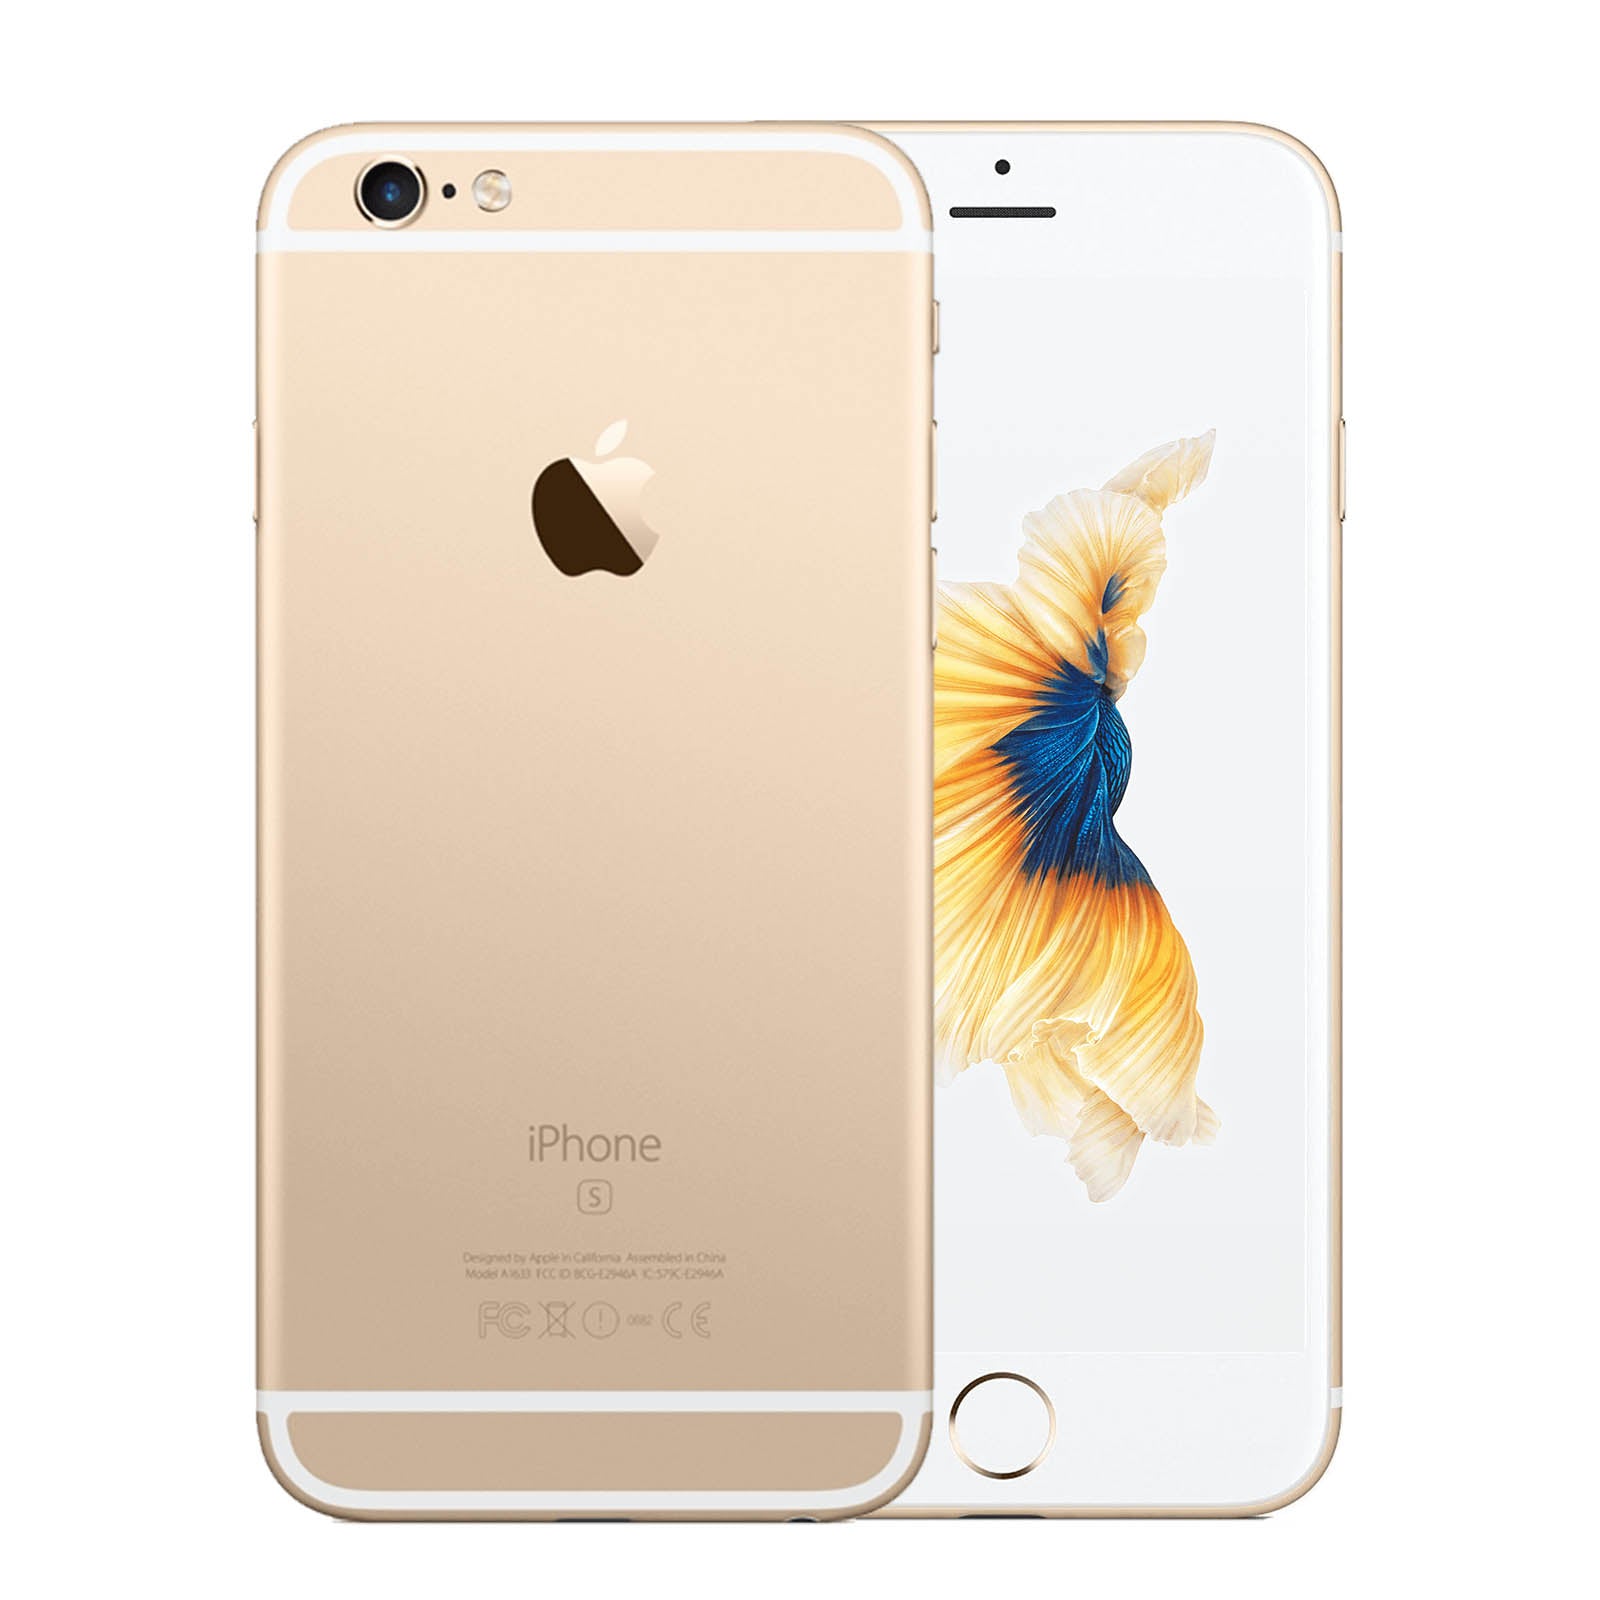 Apple iPhone 6S Plus 32GB Gold Very Good - Unlocked